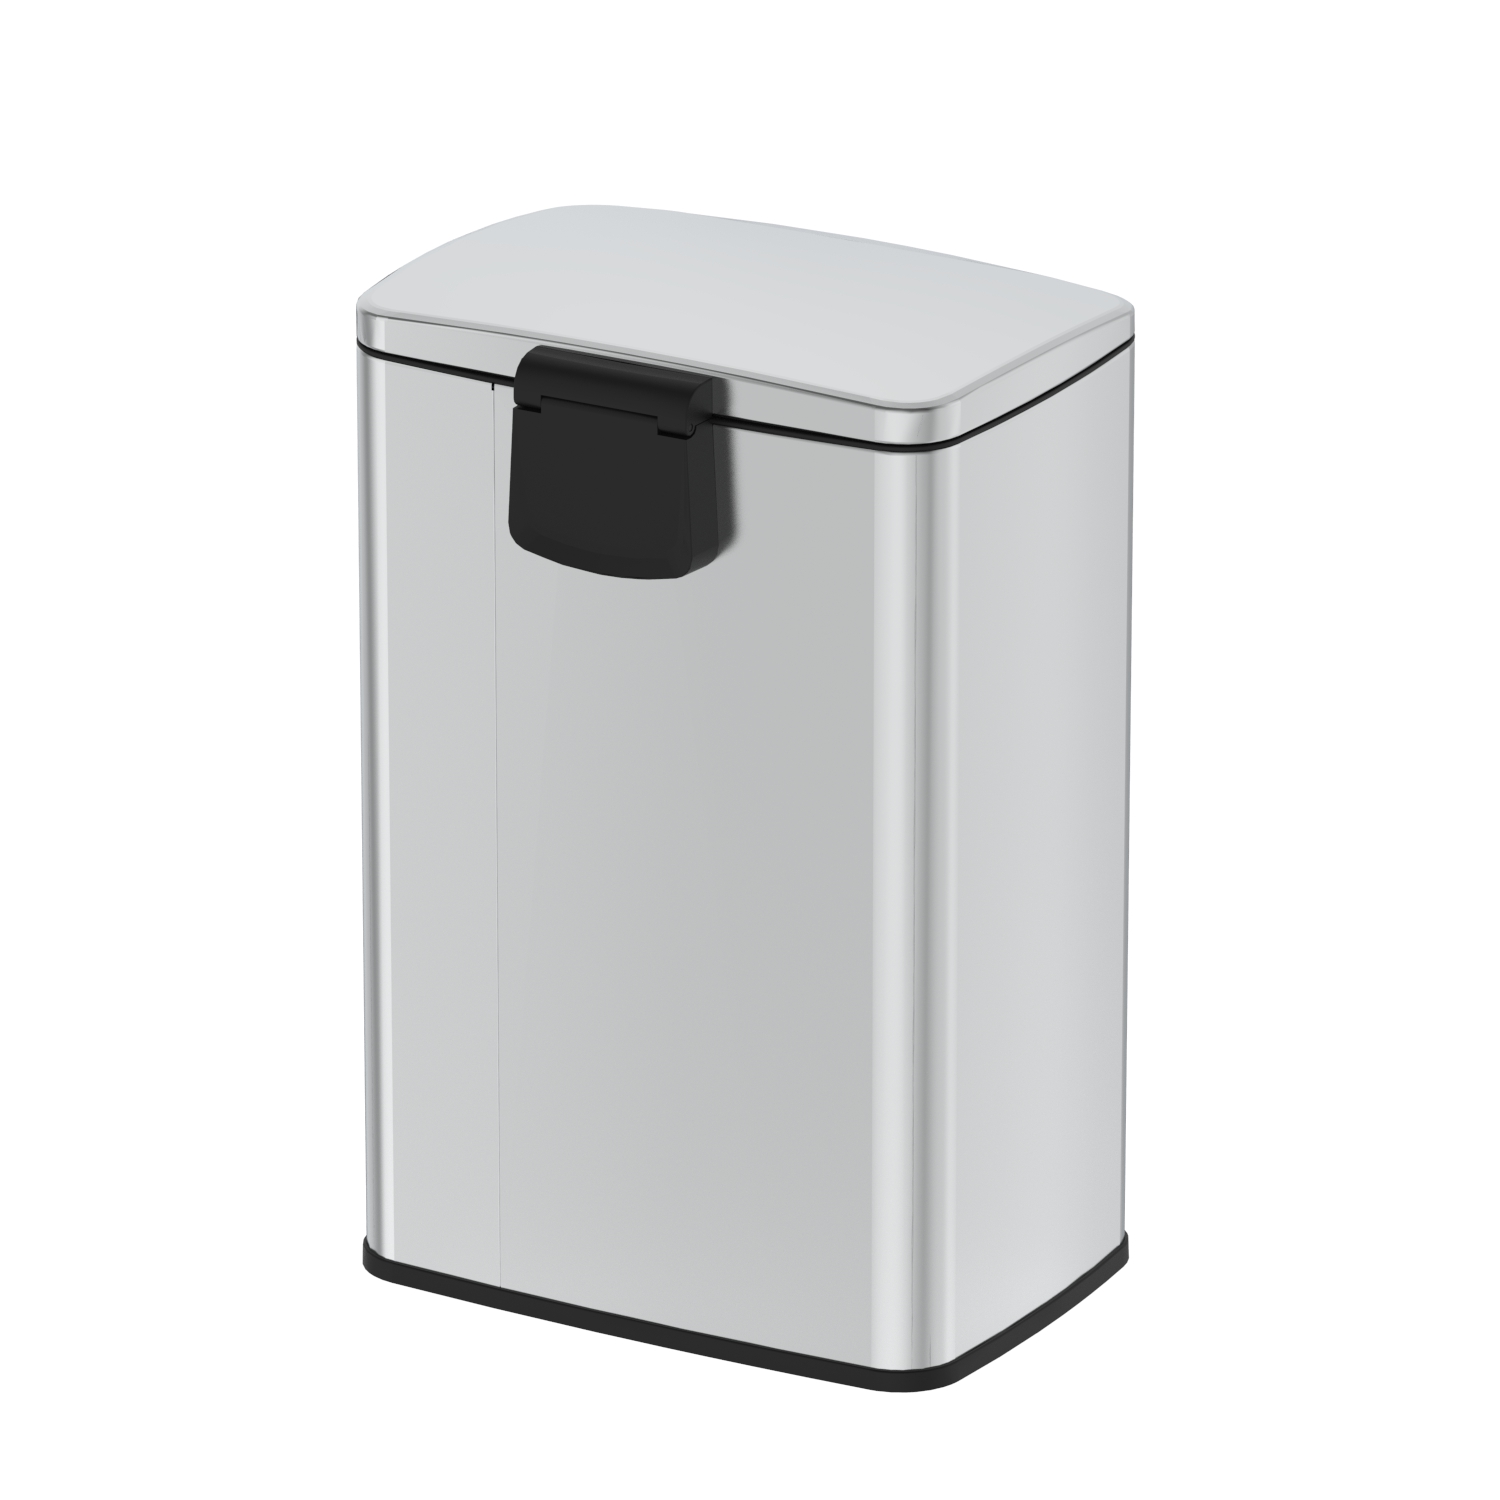 Innovaze 13 Gallon Kitchen Trash Bags with Drawstring, White (405